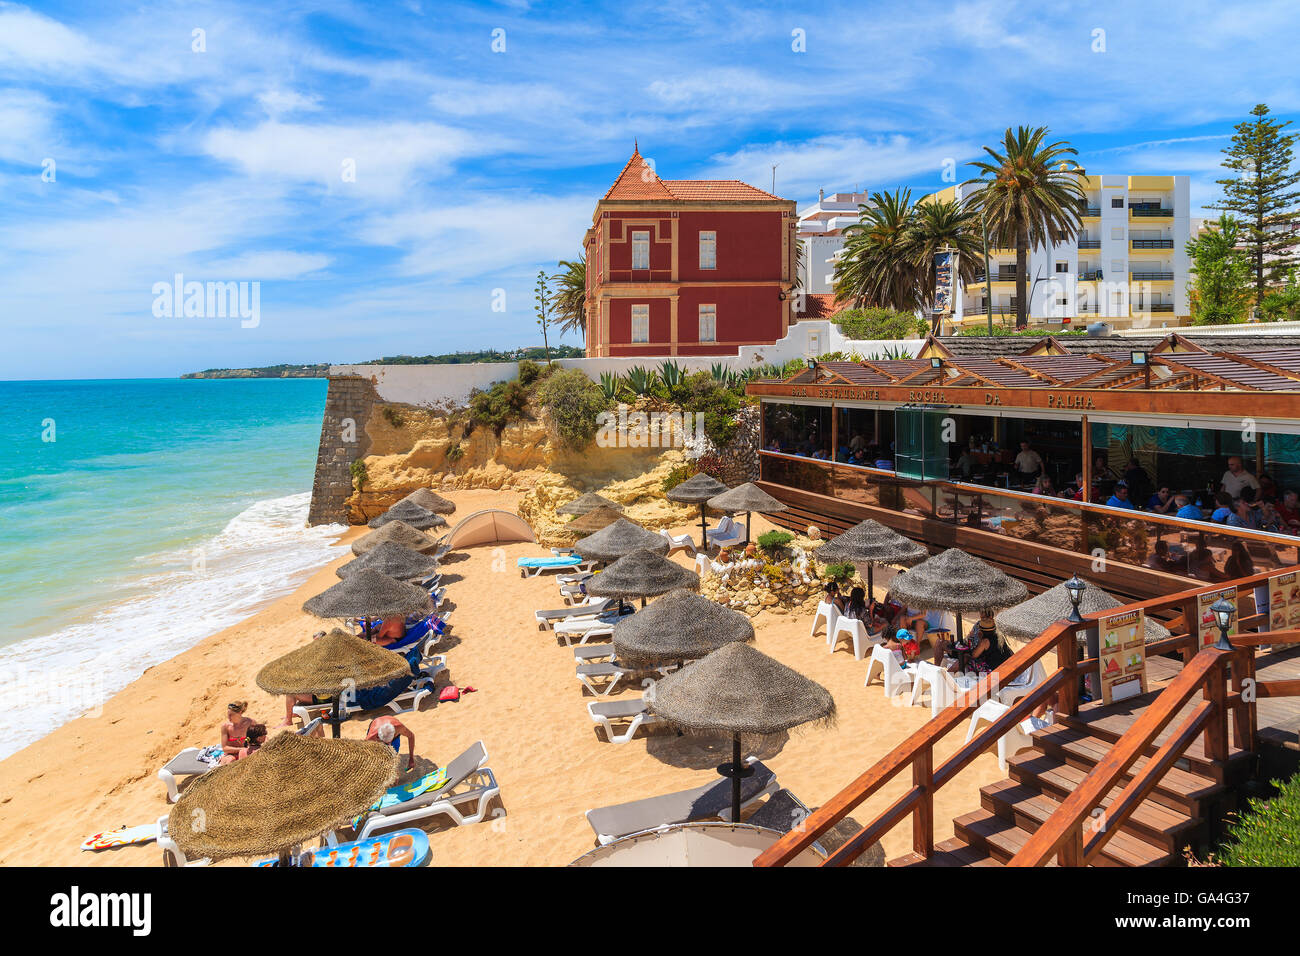 ARMACAO DE PERA BEACH, PORTUGAL - 17. Mai 2015: Restaurant am Strand von Armacao de Pera in Algarve-Region das beliebteste Urlaubsziel in Portugal ist. Stockfoto